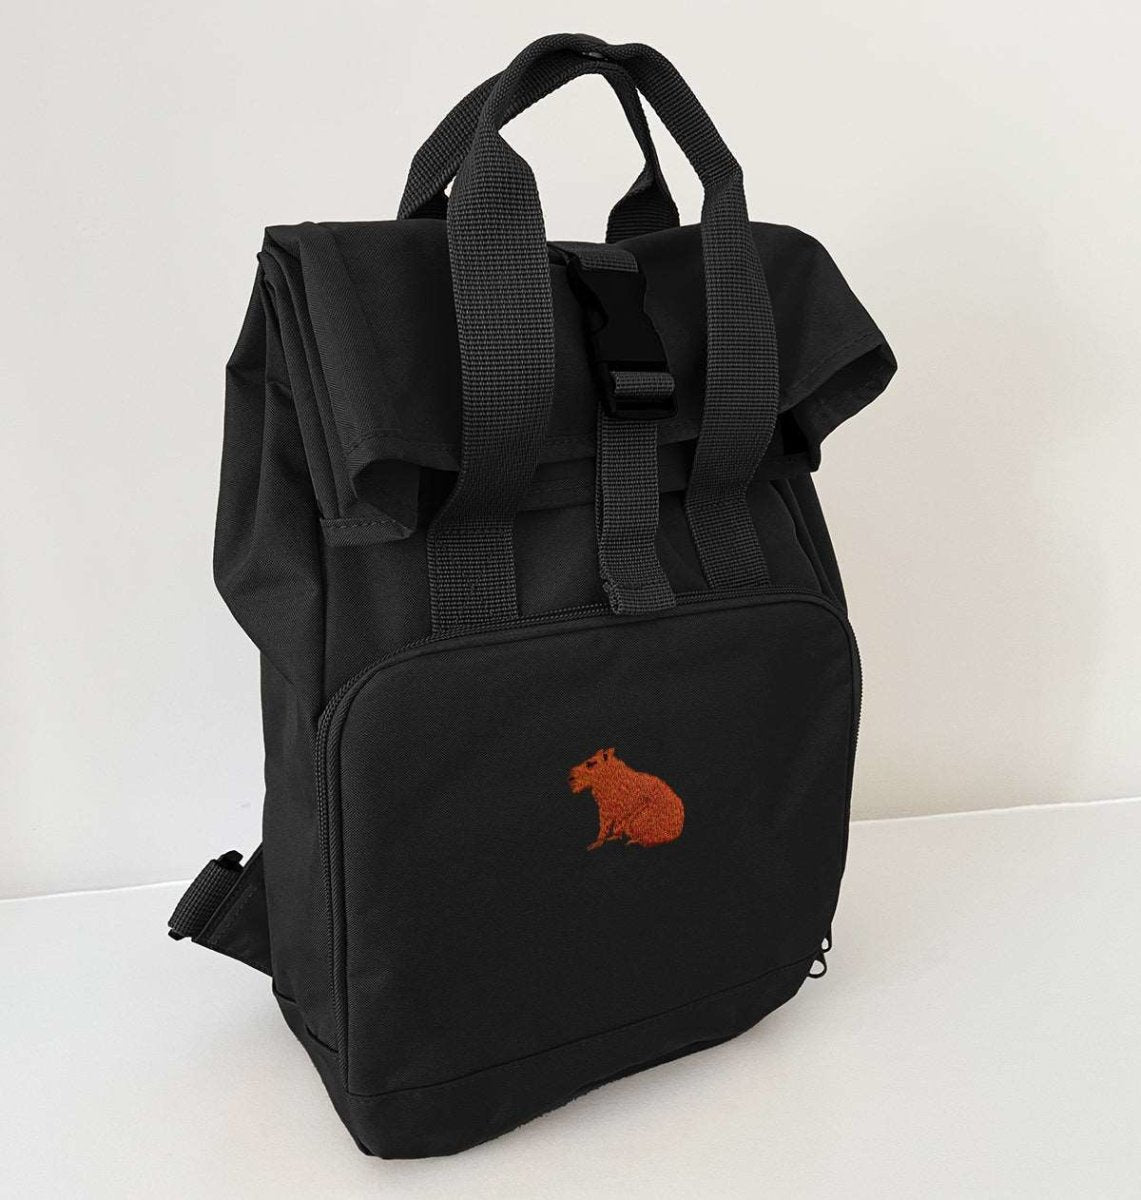 Capybara Mini Roll-top Recycled Backpack - Blue Panda